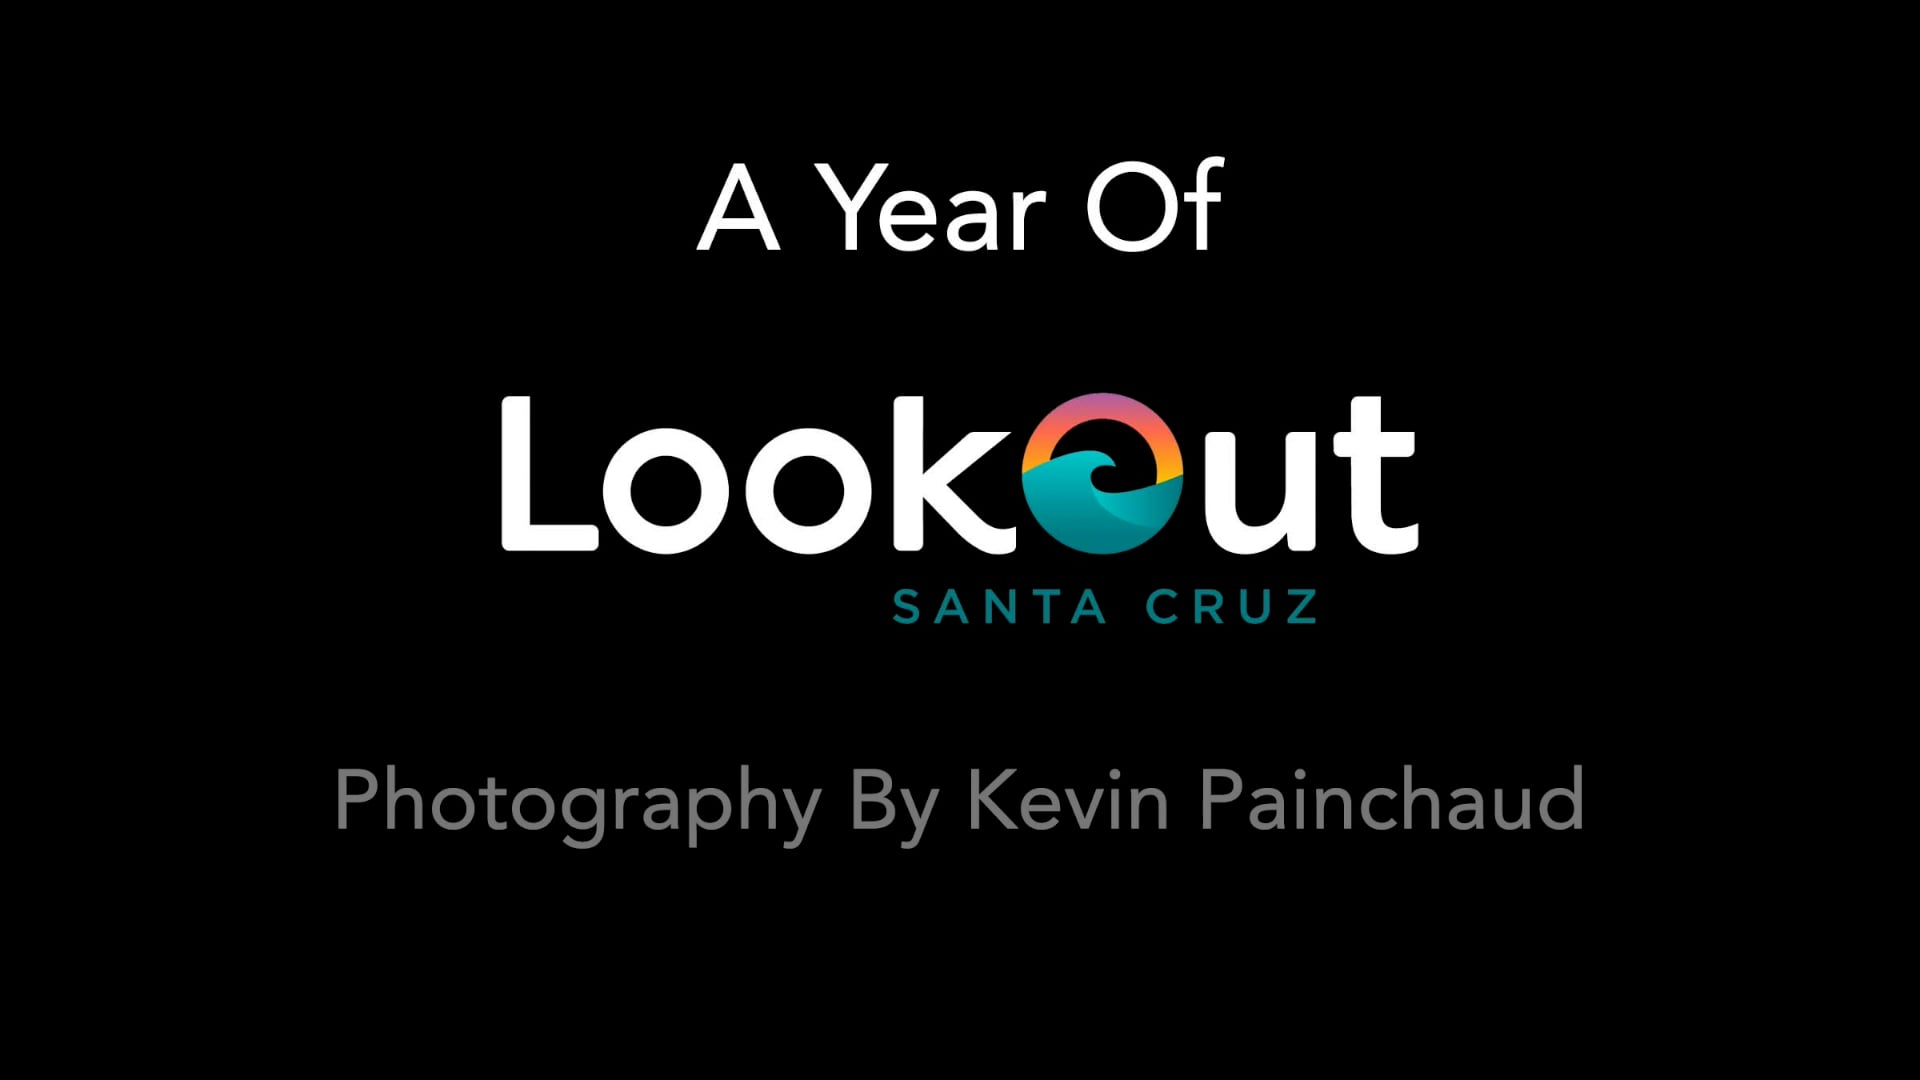 Lookout Santa Cruz Year in Photos - 2021